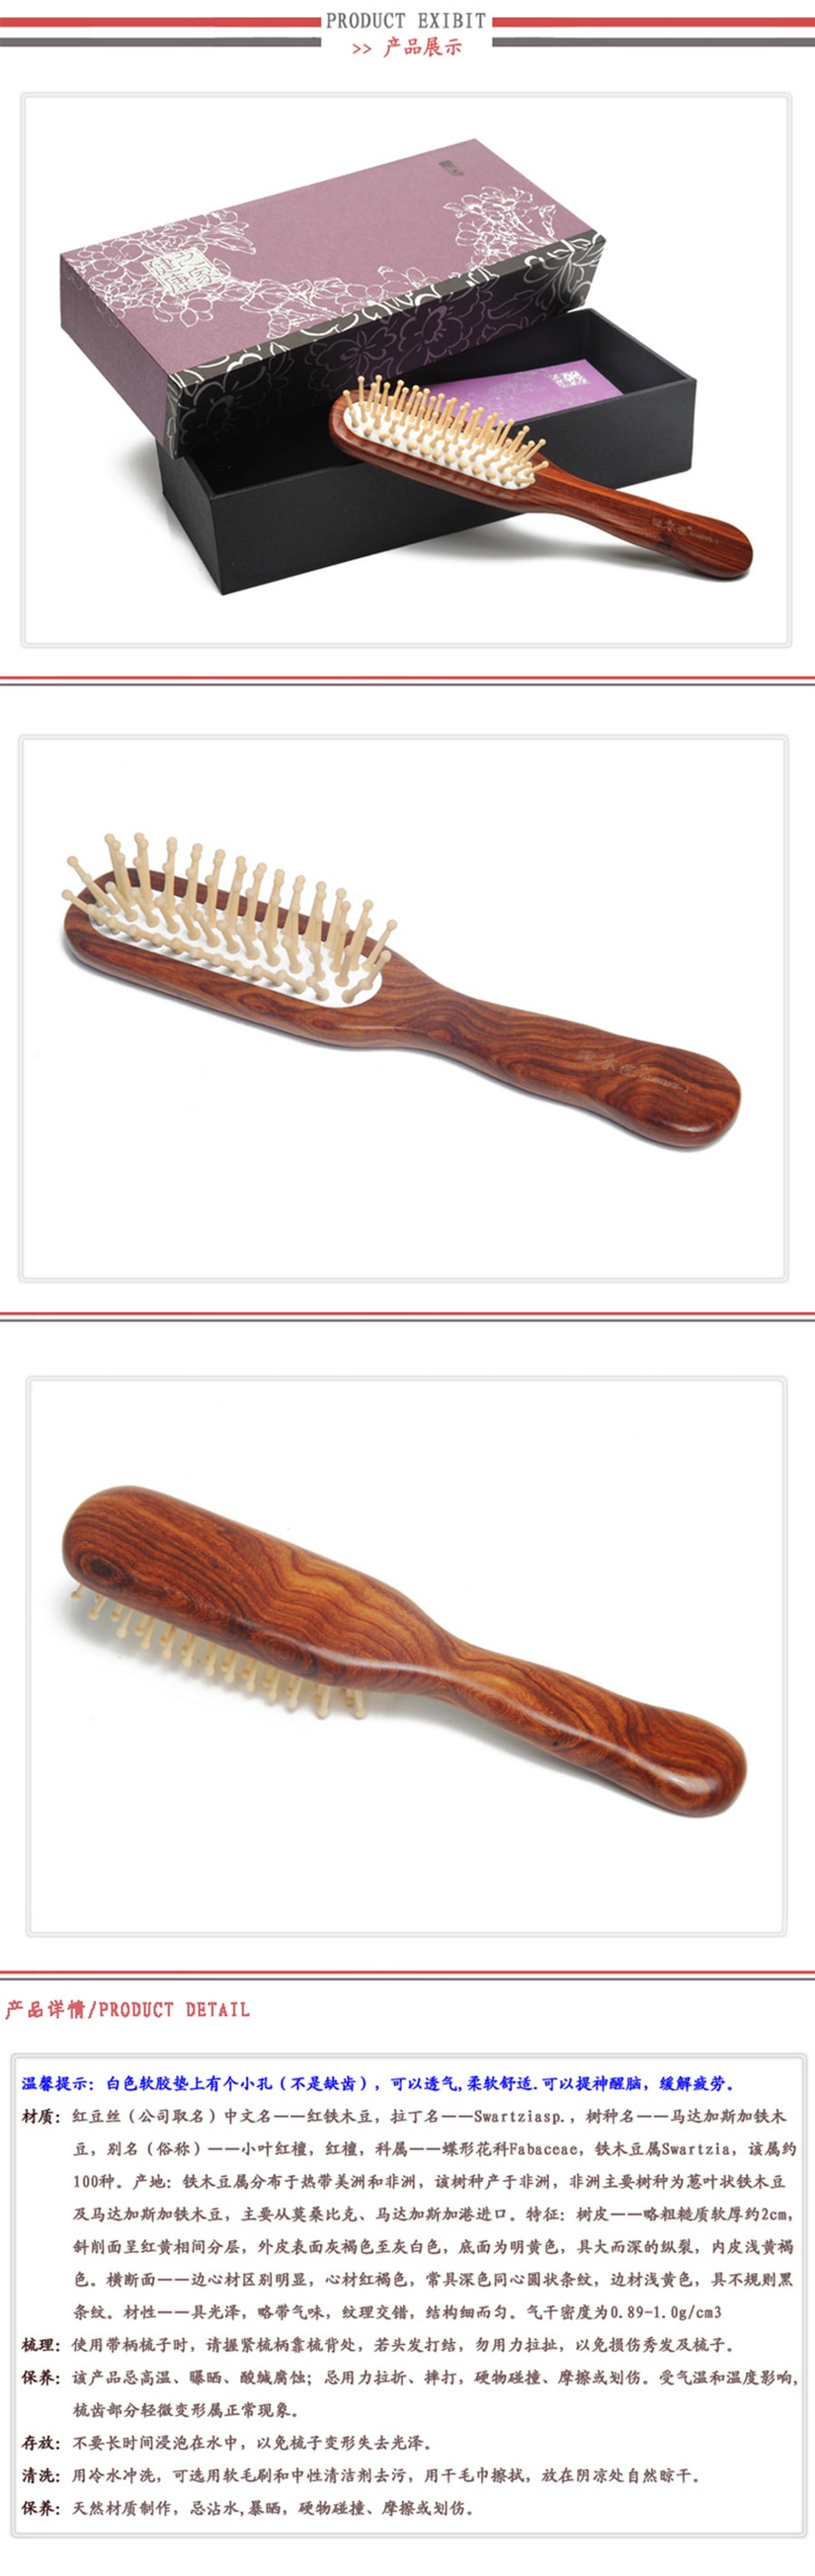 TAN MUJIANG wood hair brush hair care spa massage comb 1 piece